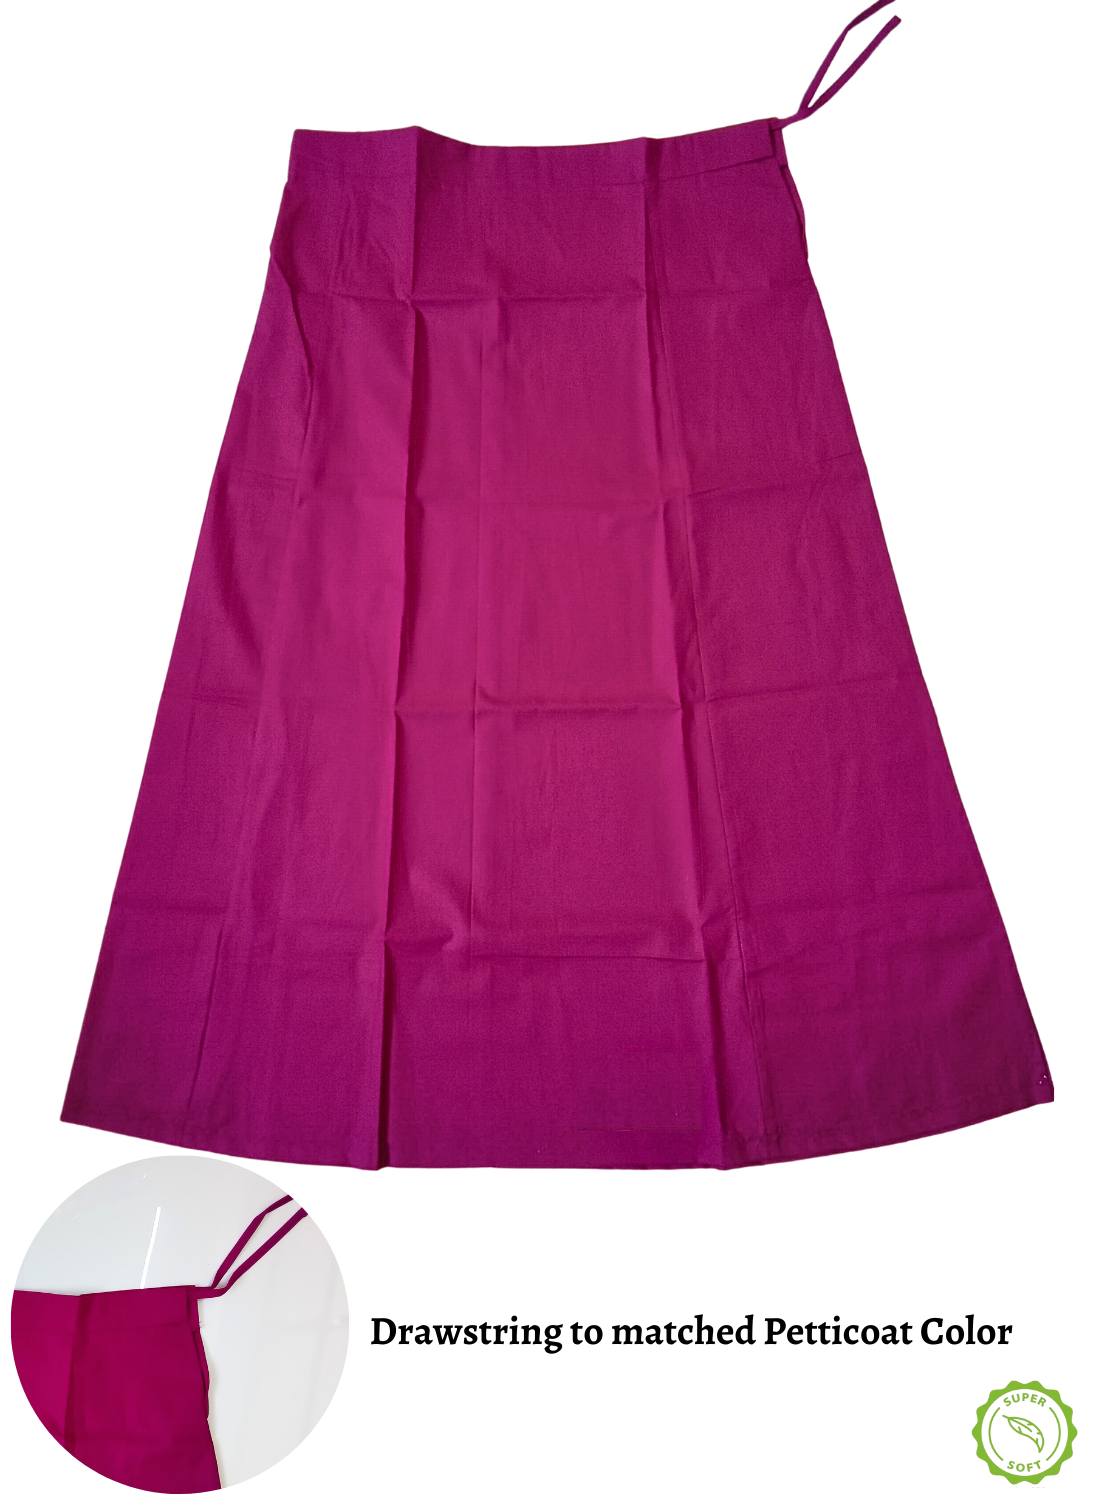 New MANGAI Premium Superior Cotton Petticoats - 7 Part | Premium Branded Women's Cotton Embroidery Petticoats